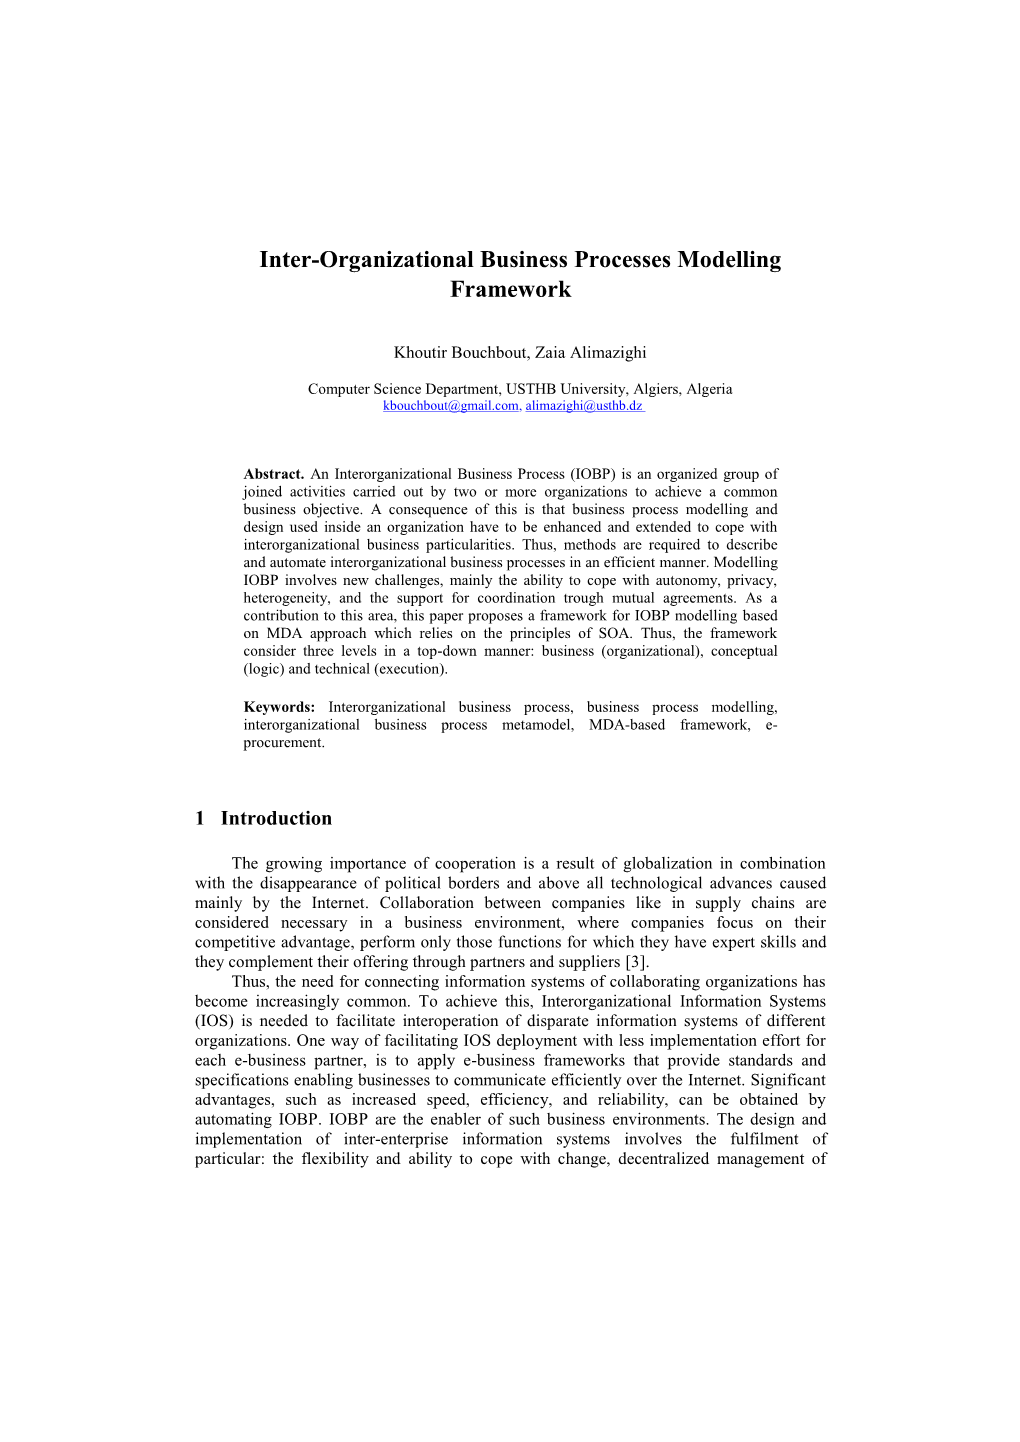 Inter-Organizational Business Processes Modelling Framework